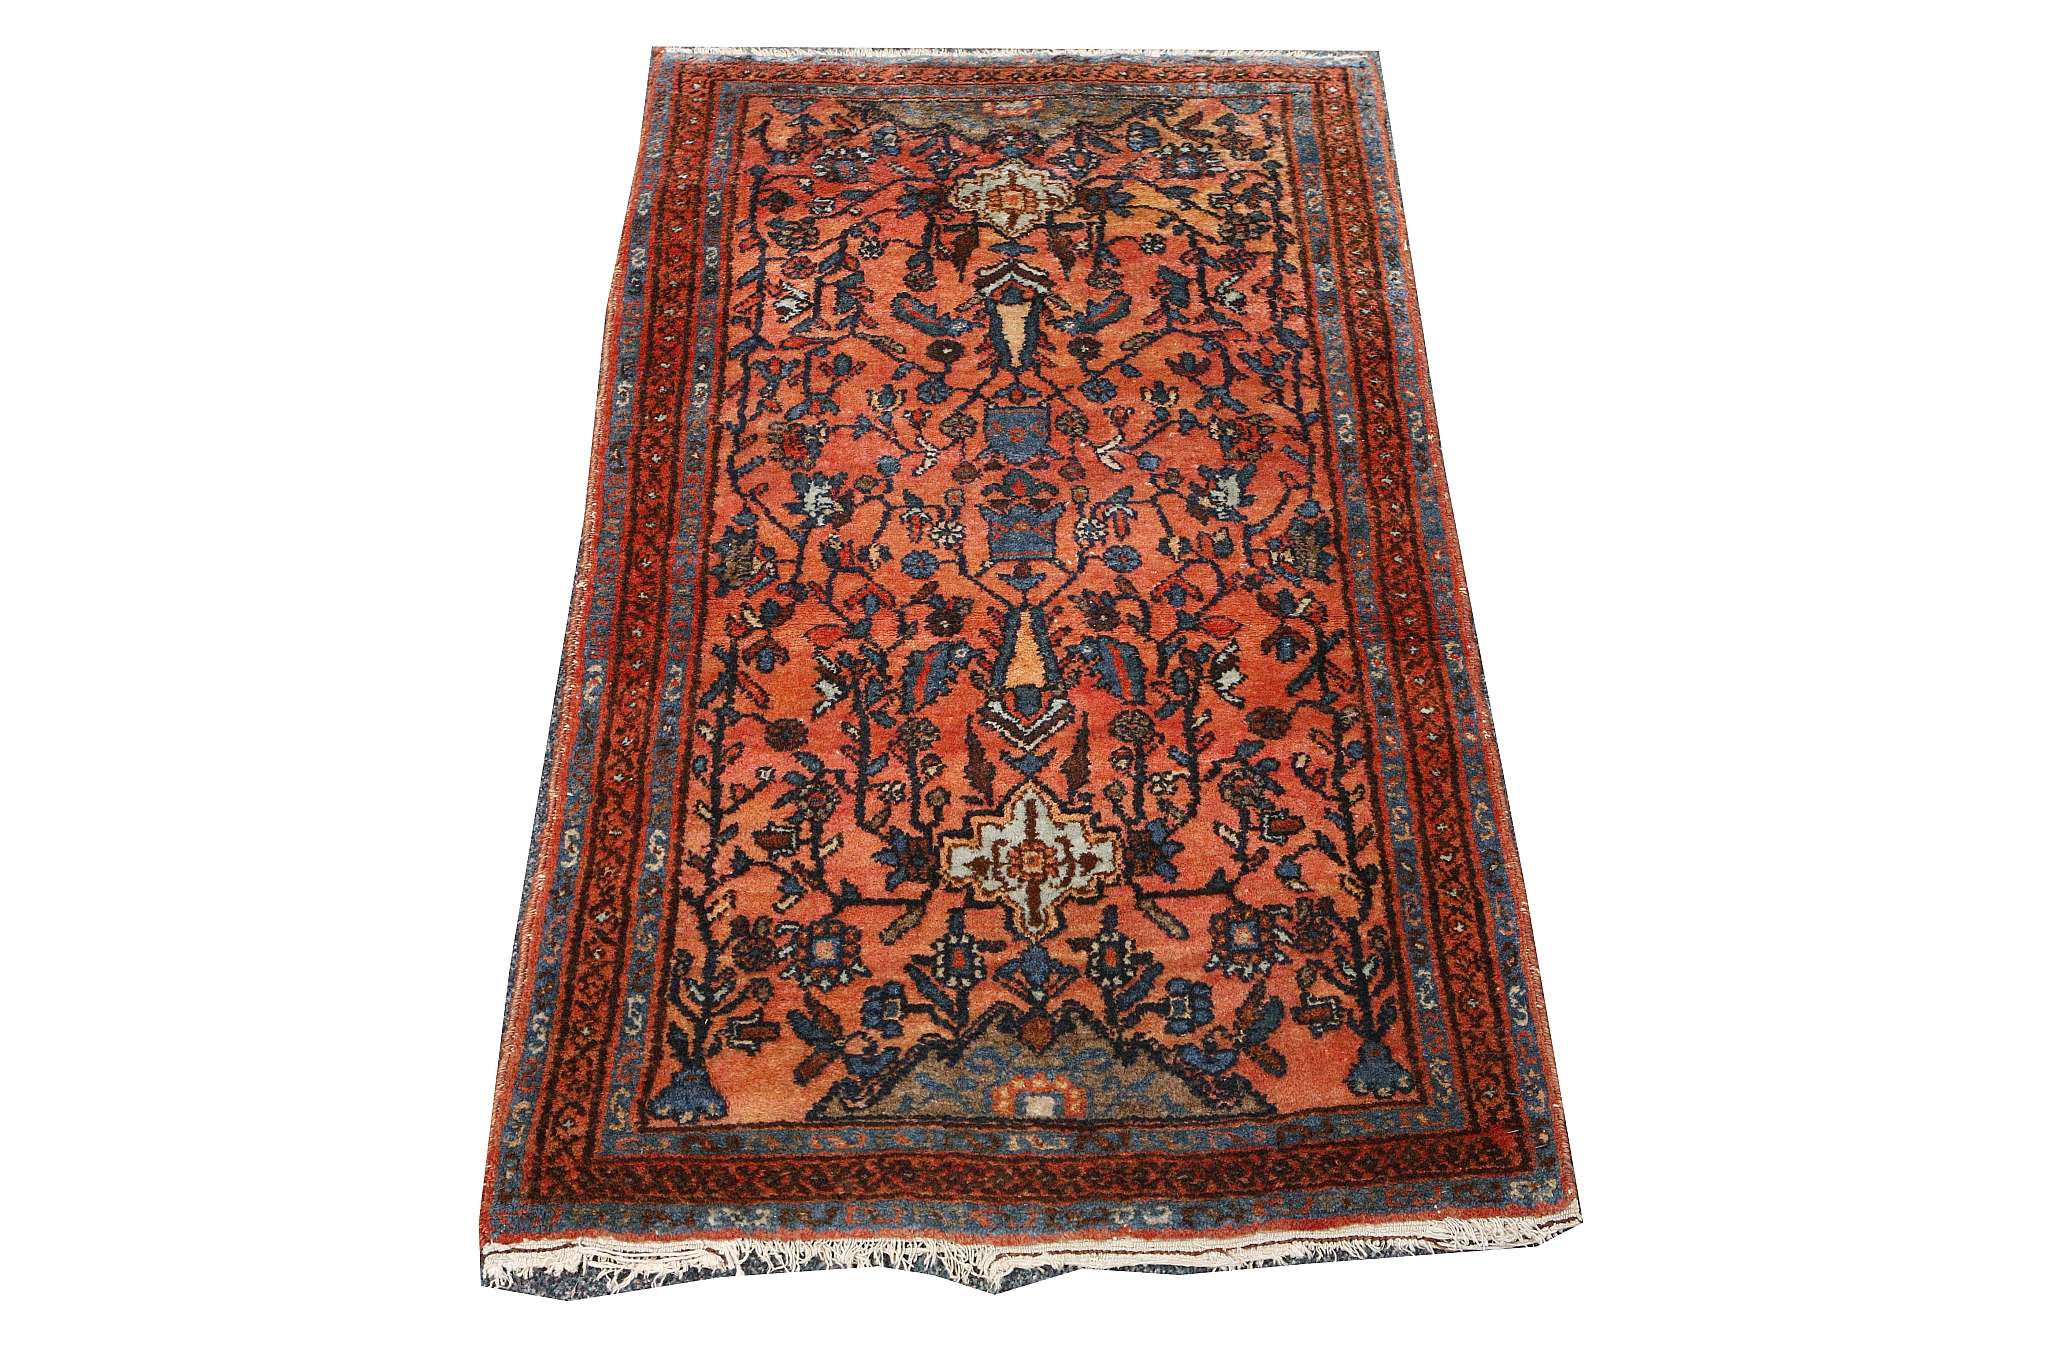 Persian Hamadan rug, 1.23m x 0.74m, condition rati